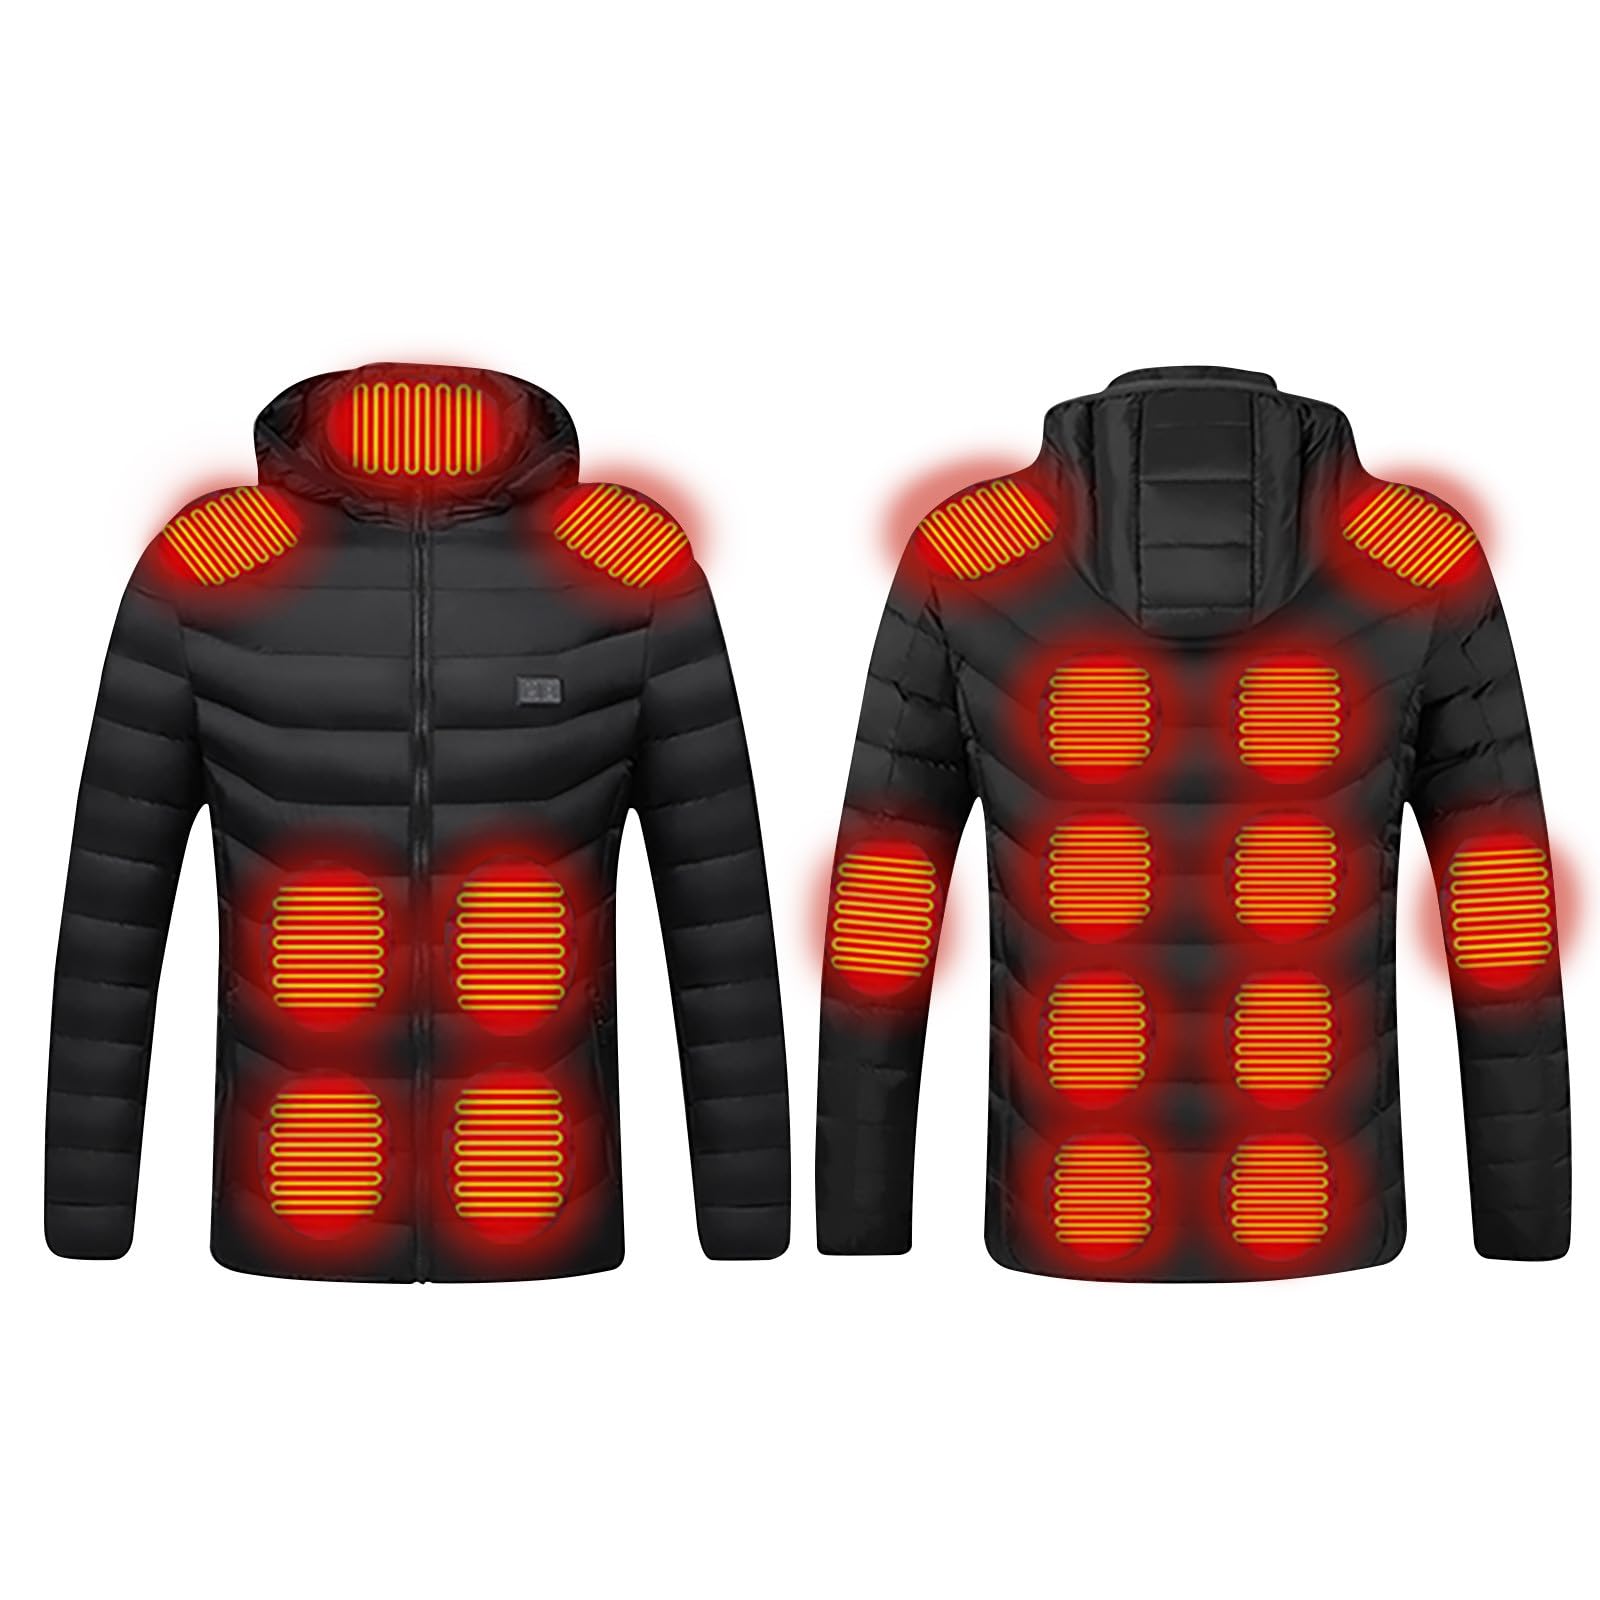 Men's Heated Jacket Winter Heating Coat Women Heated Hoodie 17 Heating Areas Smart Electric Heated Jackets Body Warmer